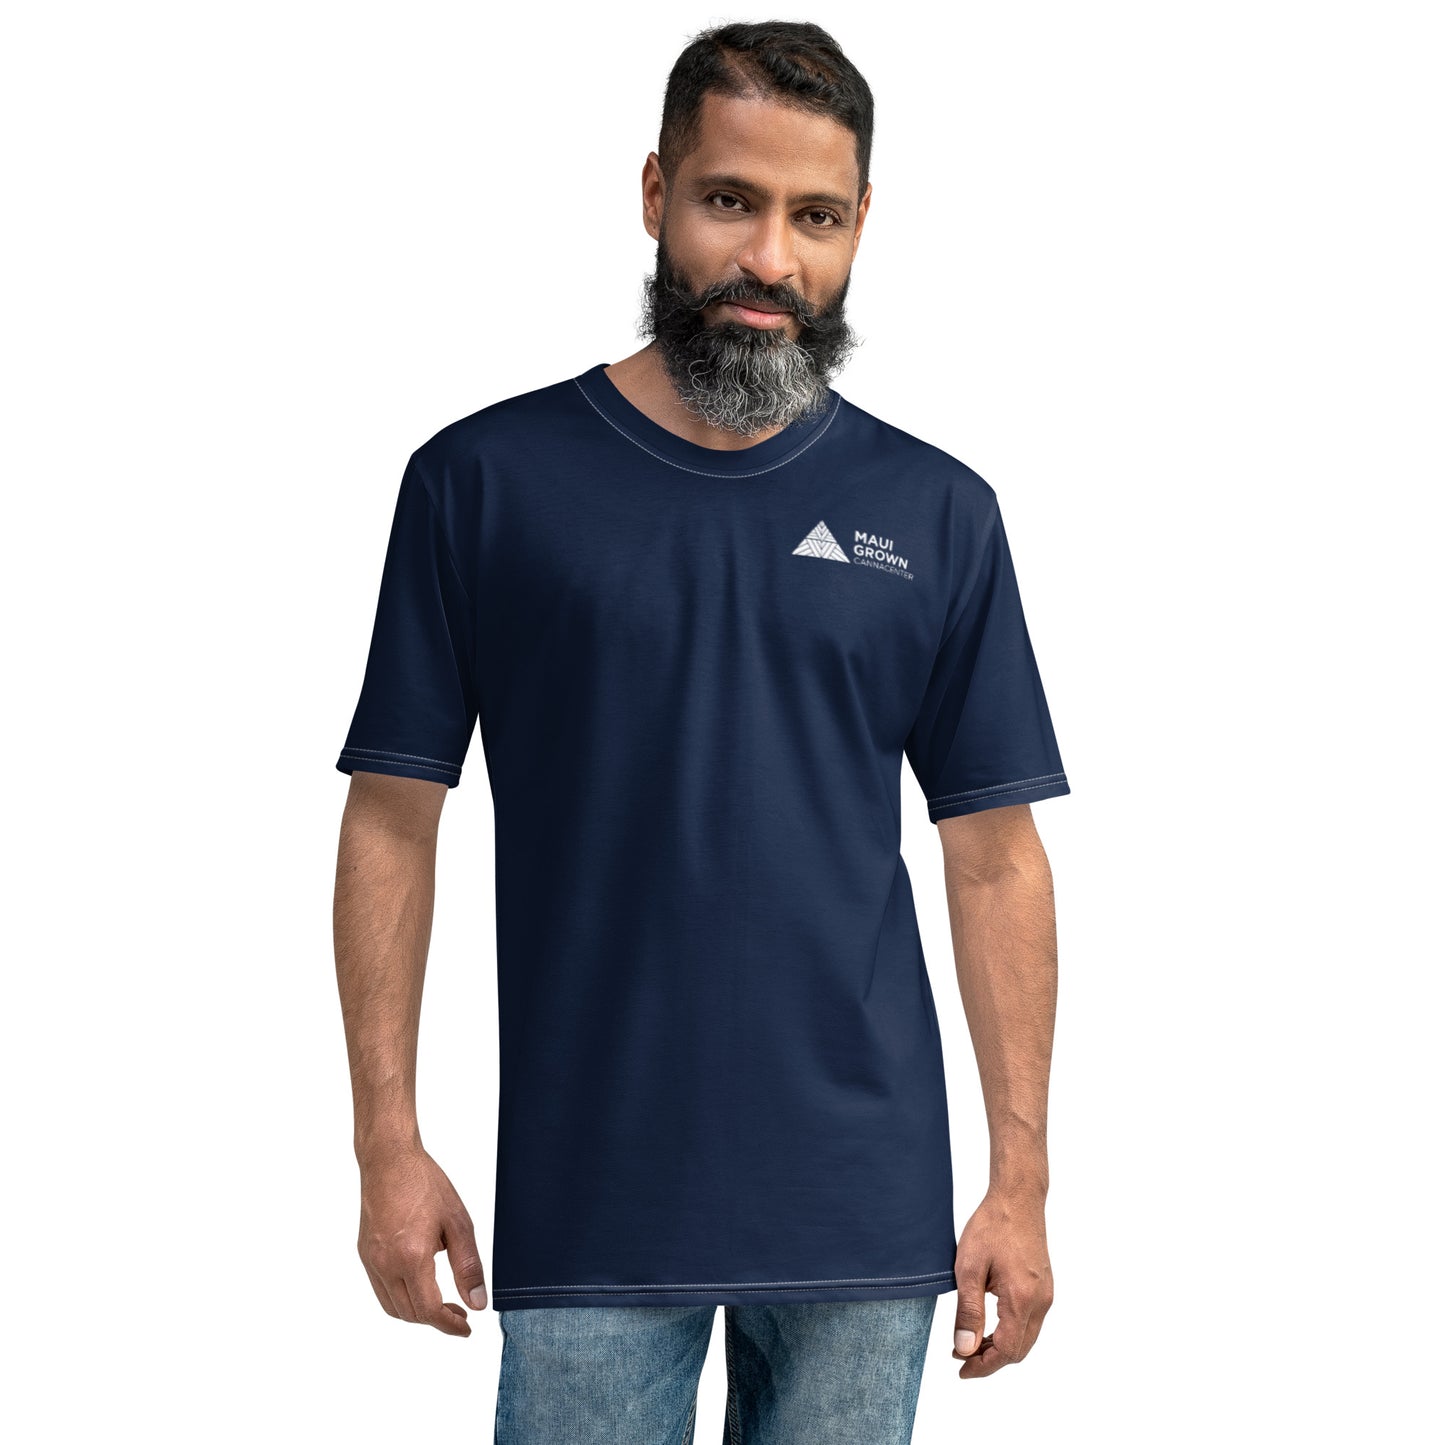 Maui Grown Cannacenter Men's Sublimated T-Shirt - Navy